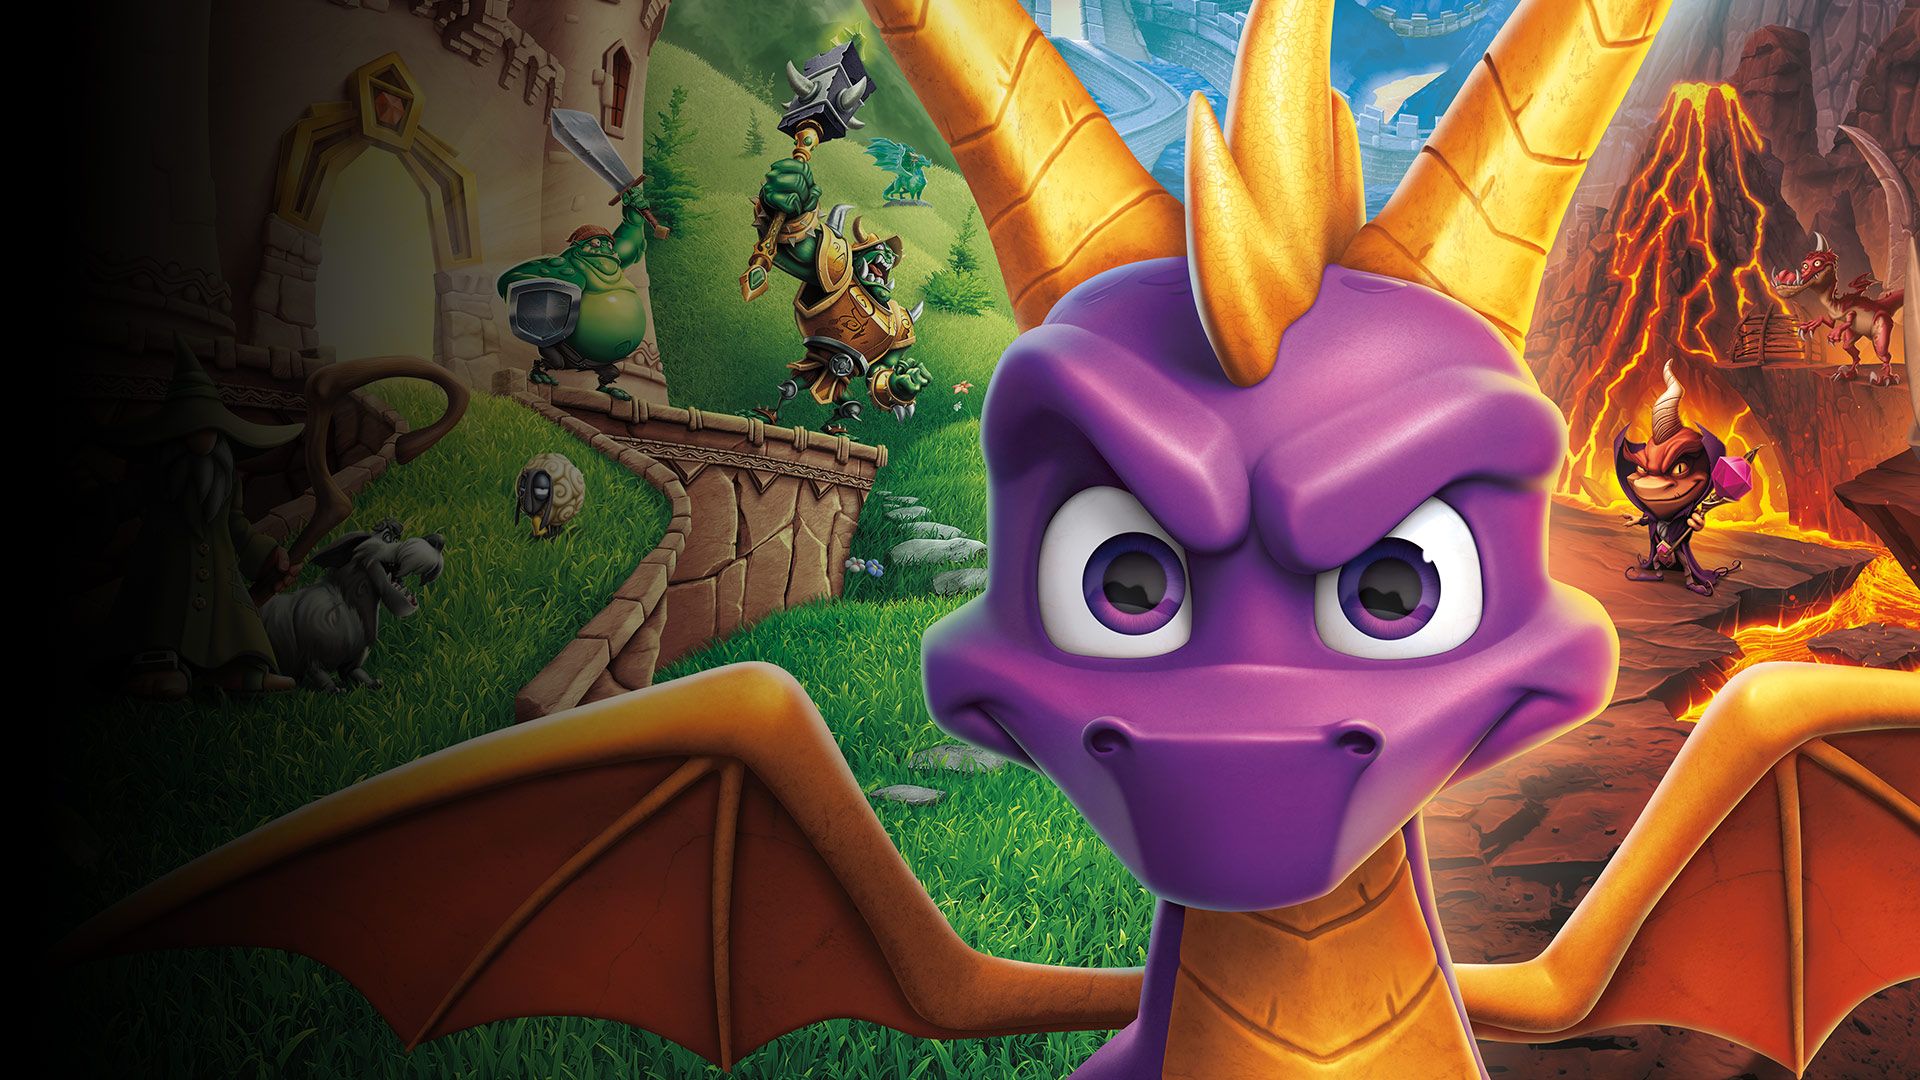 Spyro the Dragon cover image